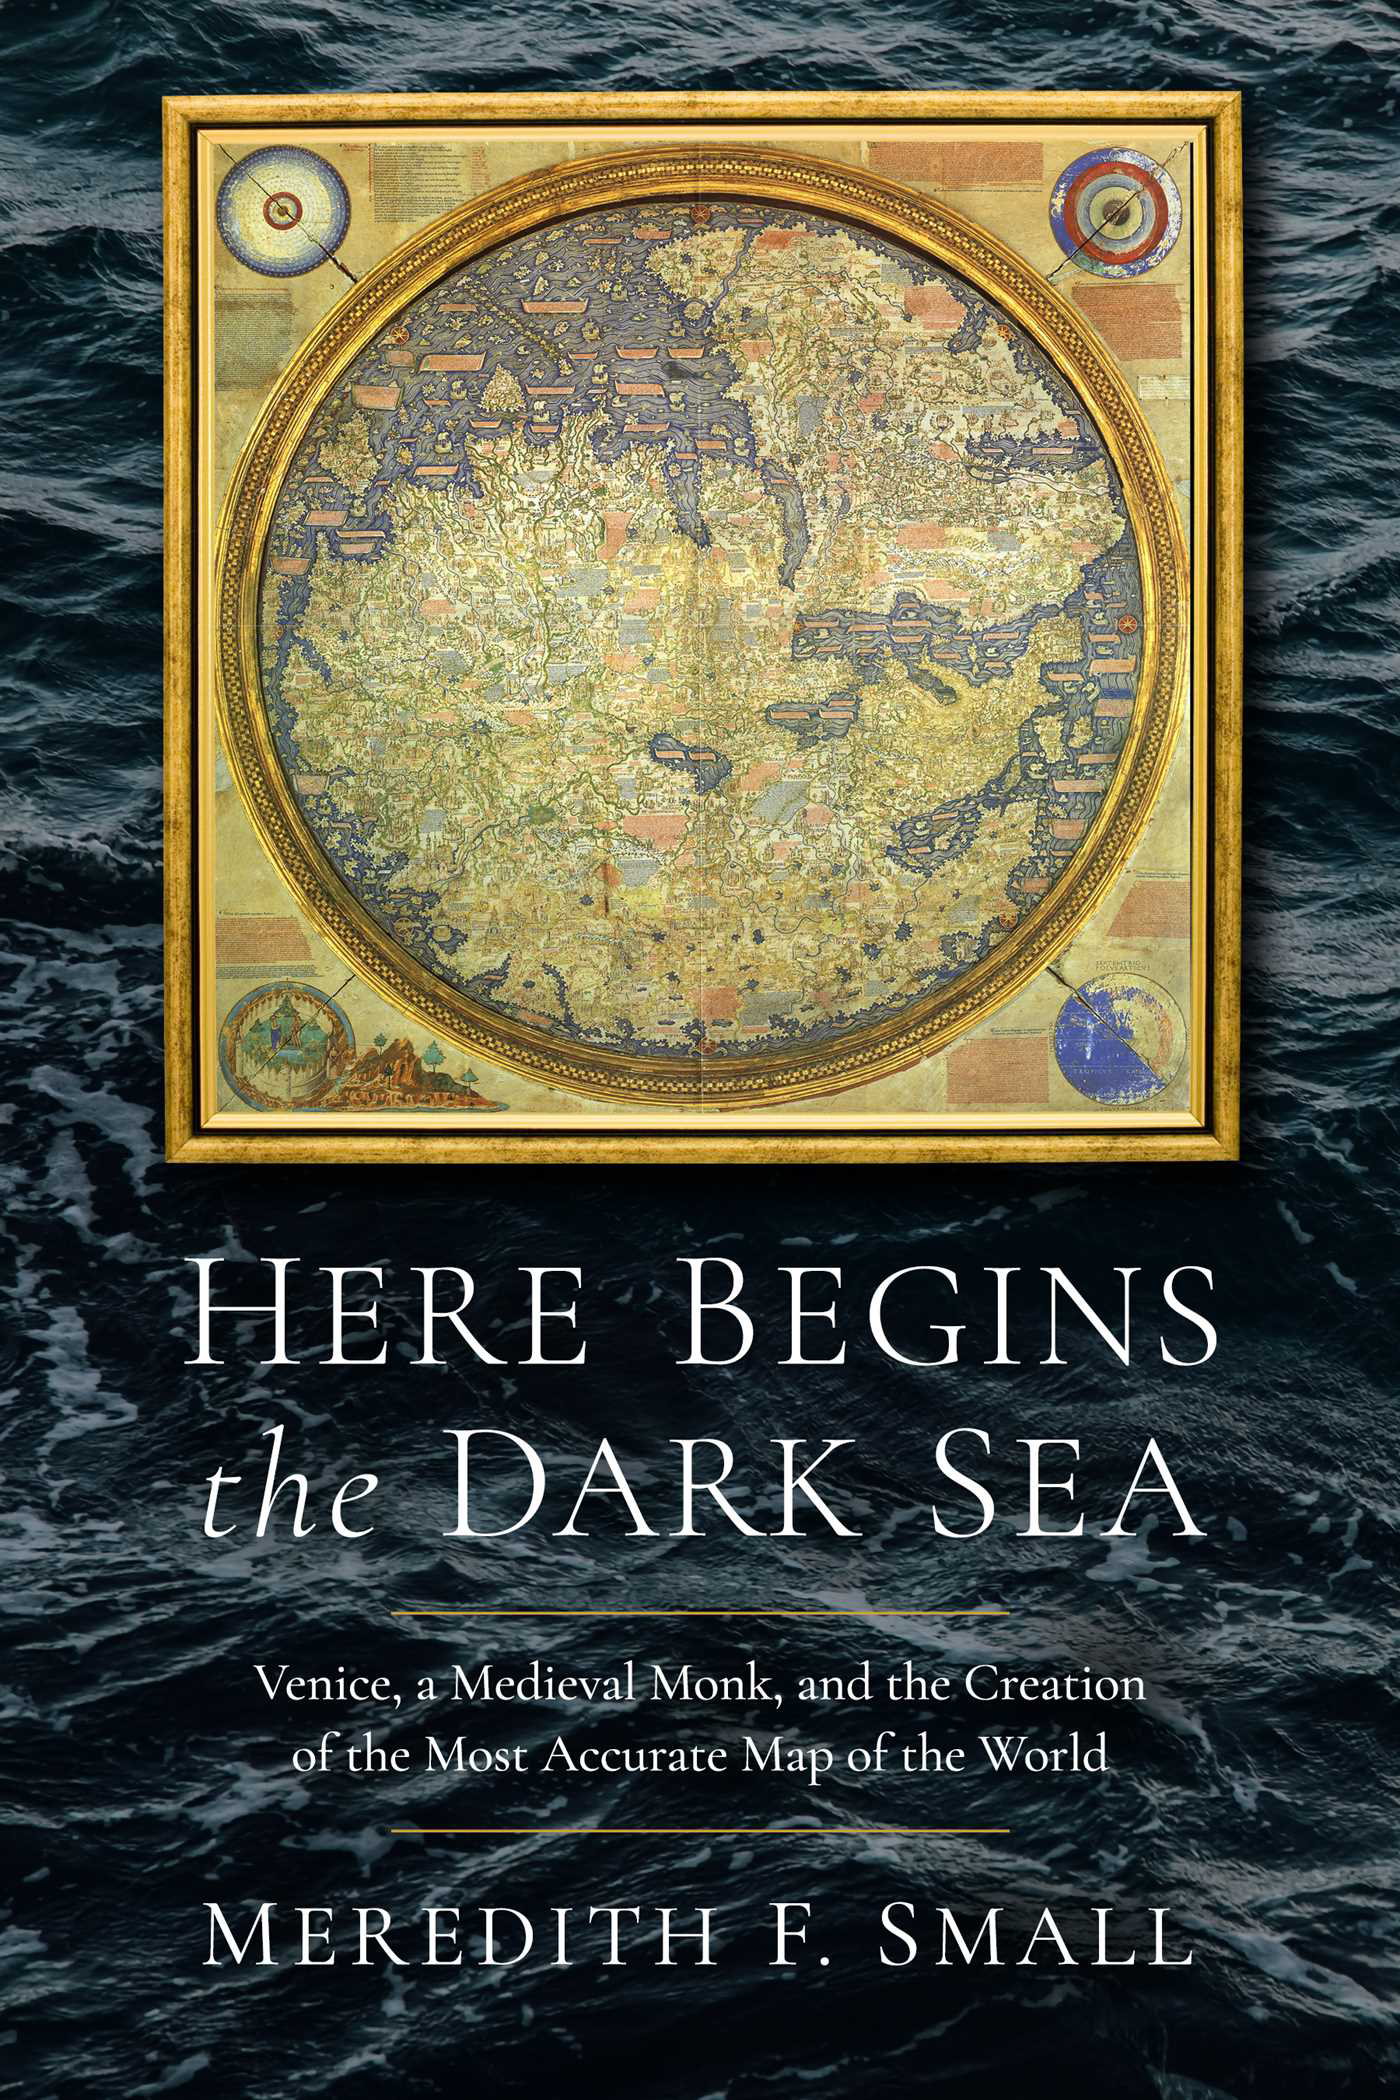 Here Begins the Dark Sea | Meredith F. Small